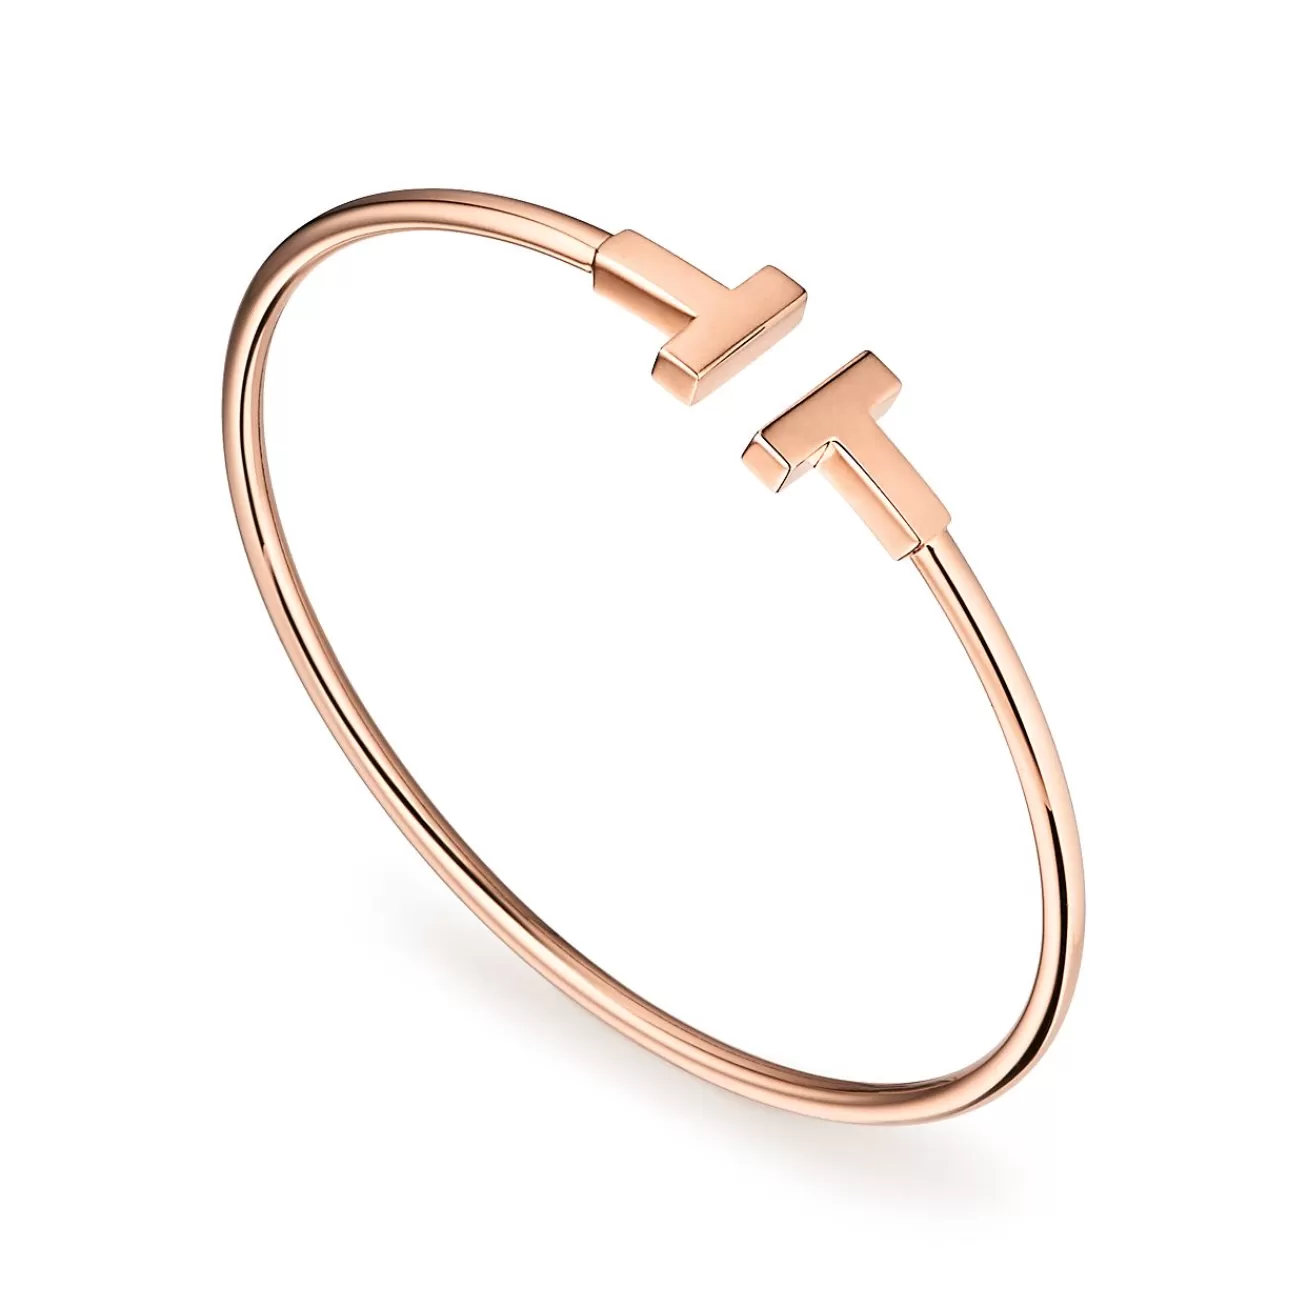 Tiffany & Co. Tiffany T wire bracelet in 18k rose gold, medium. | ^ Bracelets | Dainty Jewelry